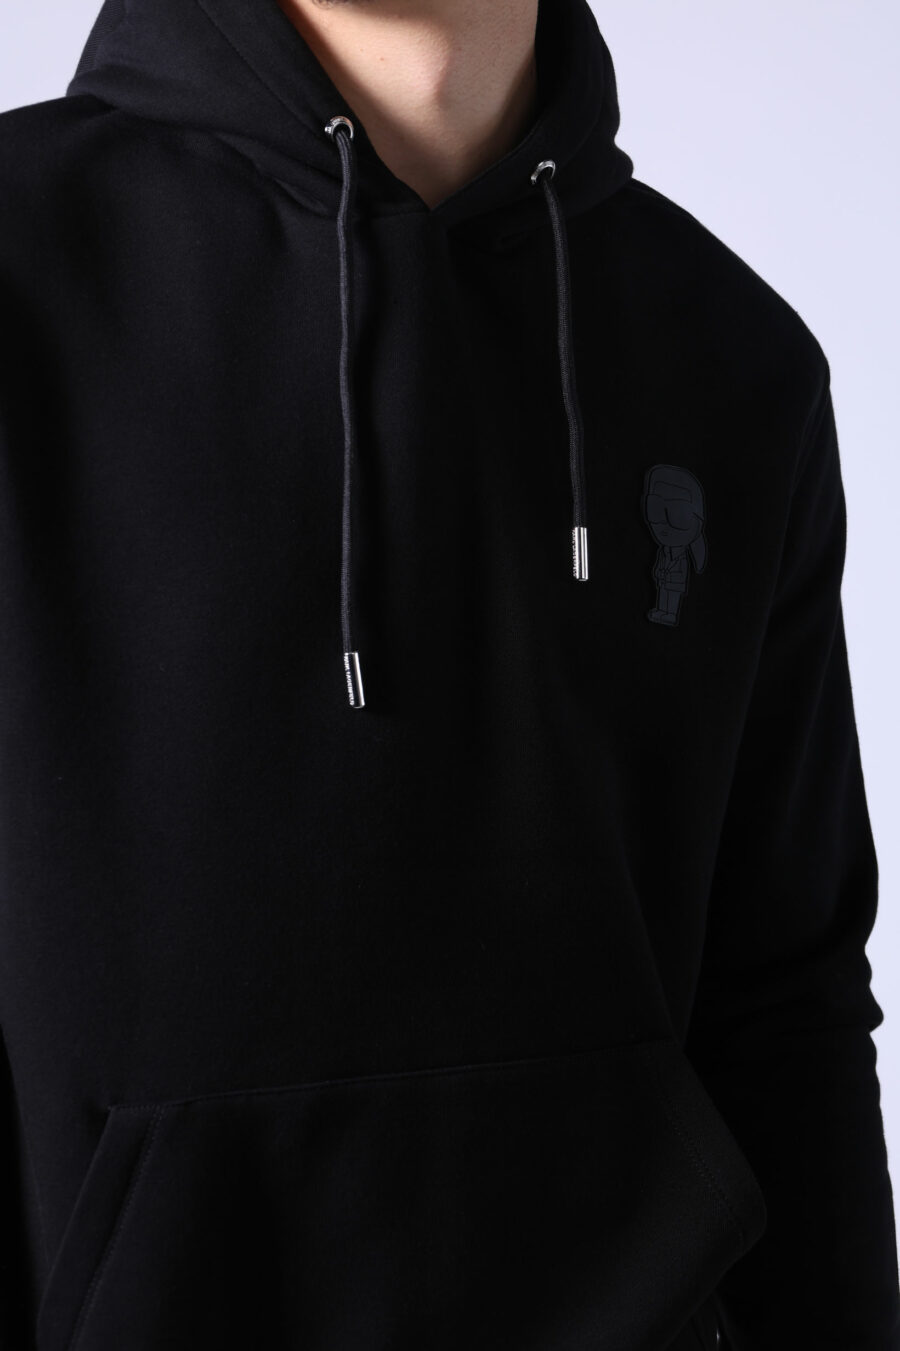 Black hooded sweatshirt with monochrome rubber mini logo - Untitled Catalog 05769